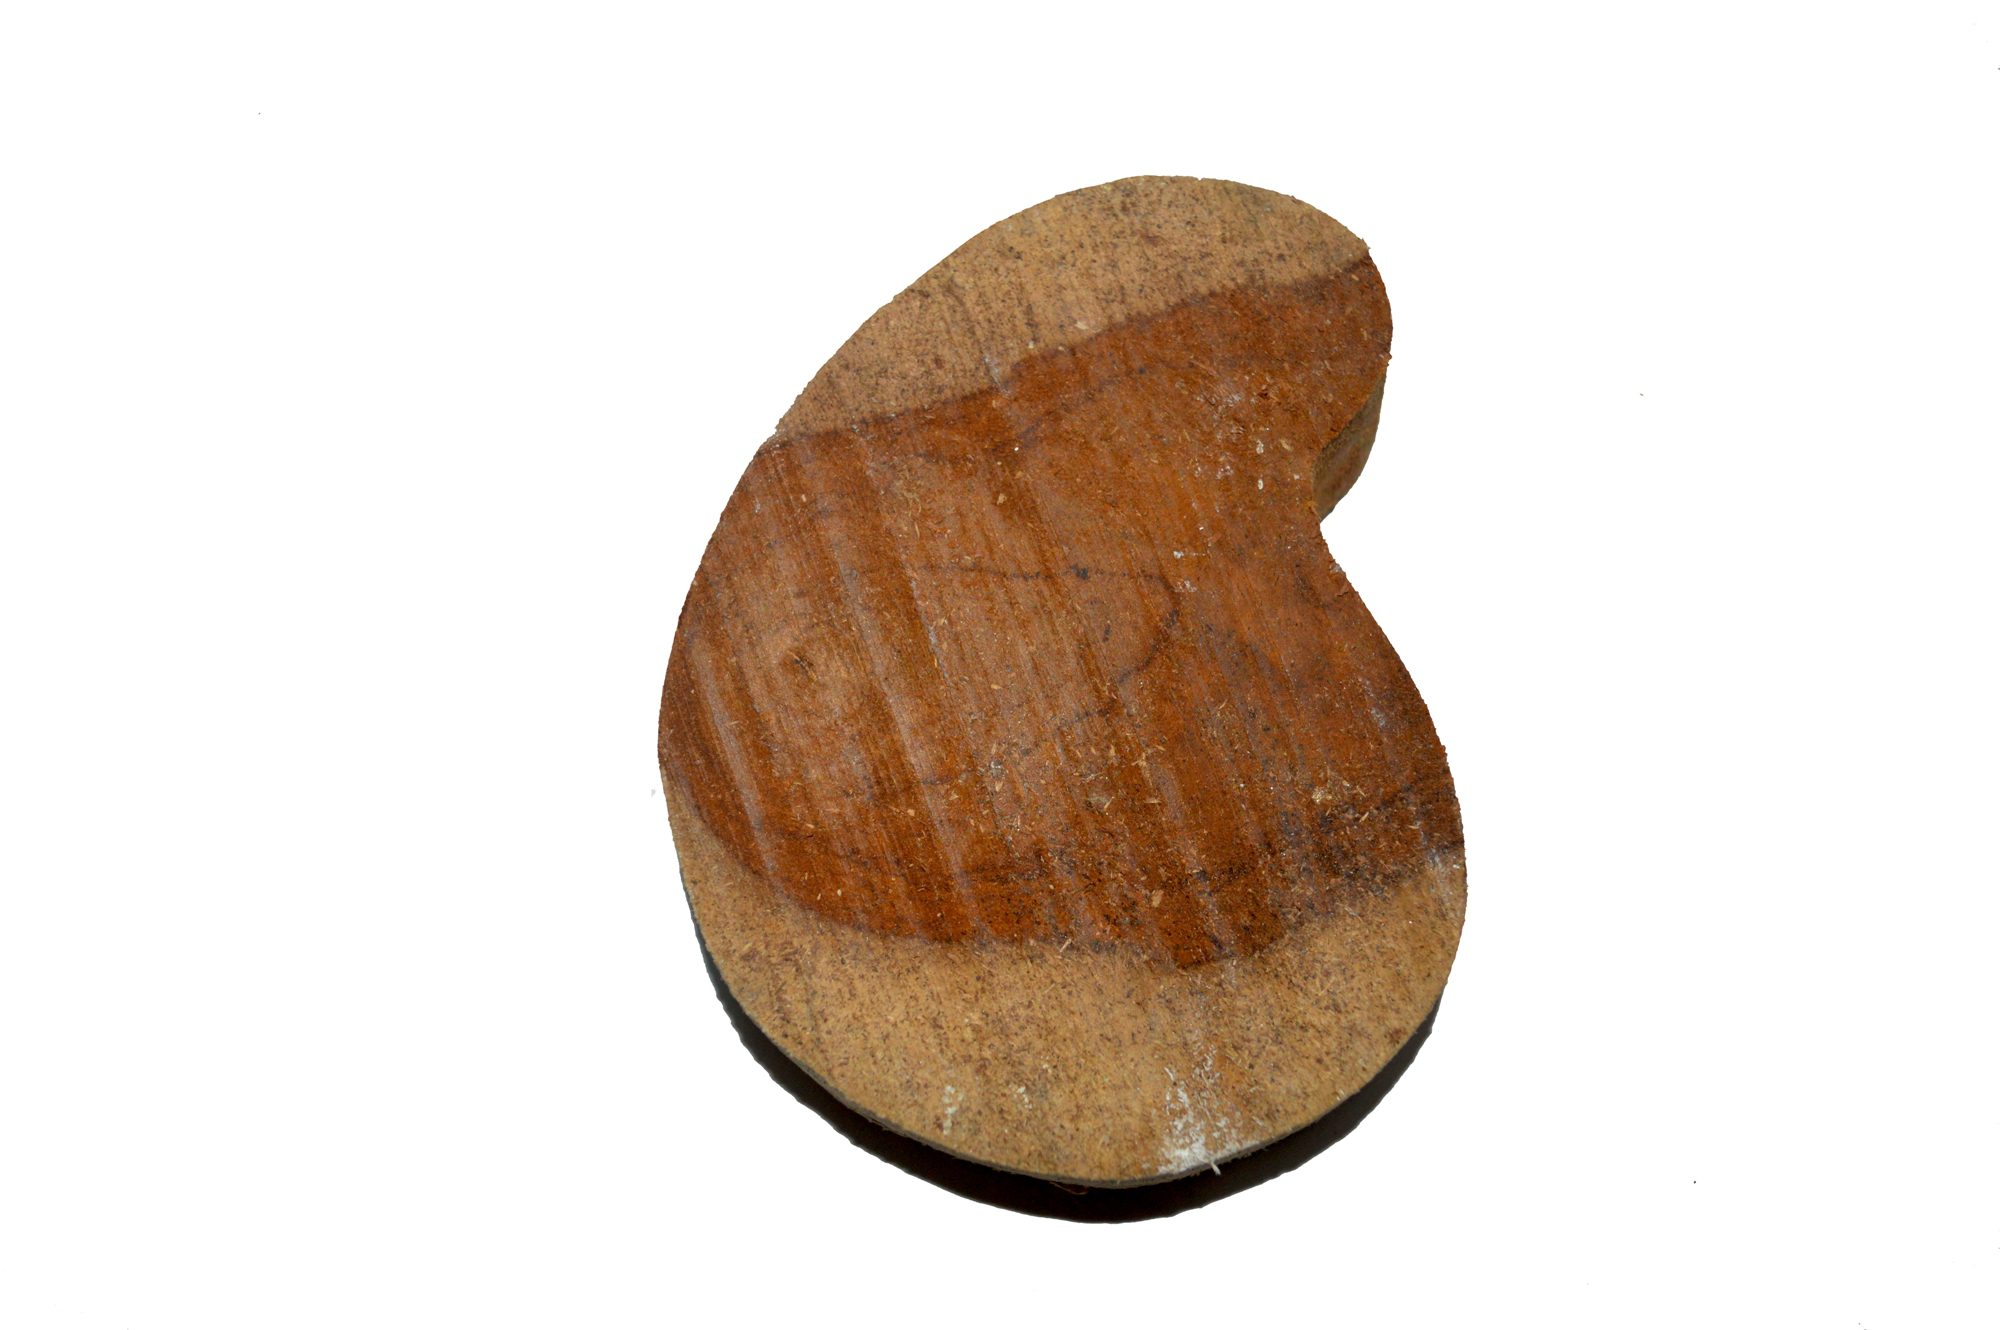 handiwoodz-wooden-carved-printing-block-stamp-hasthcraft